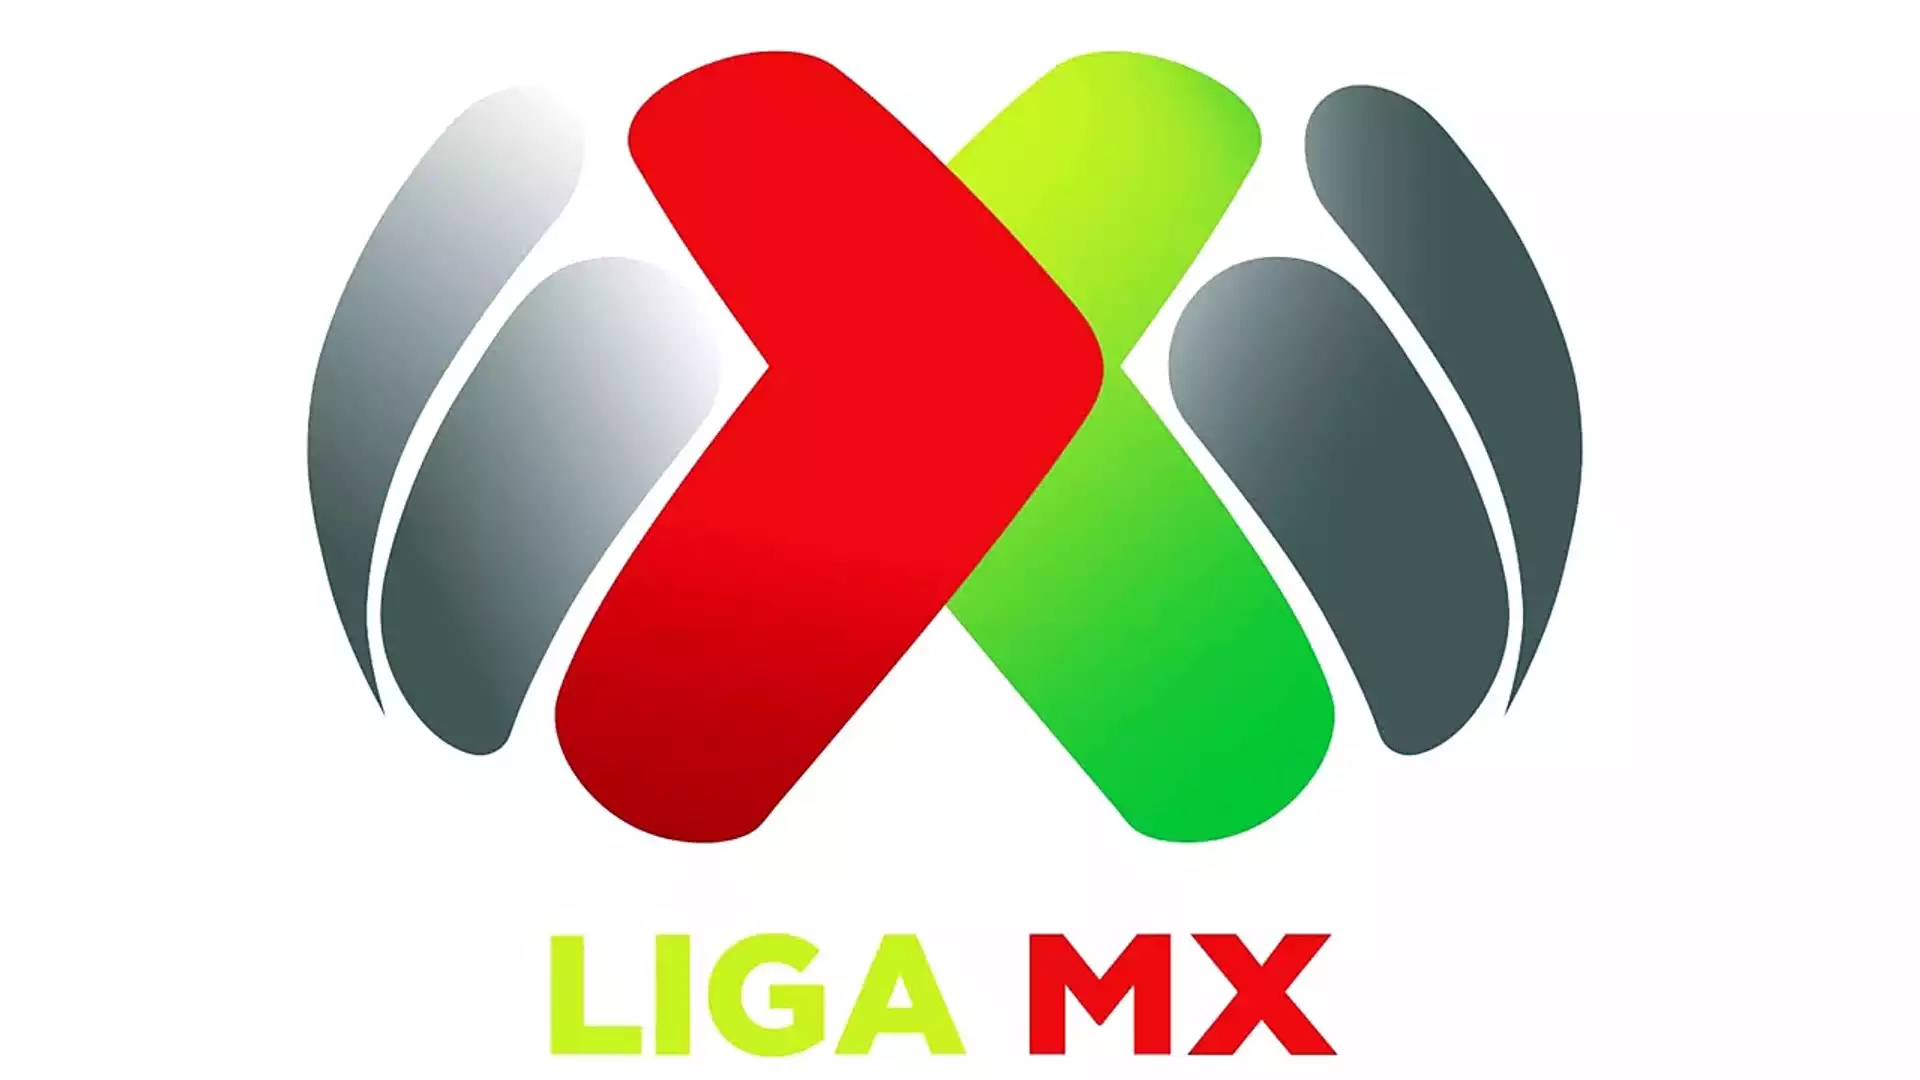 A Brief History of Liga MX Clubs